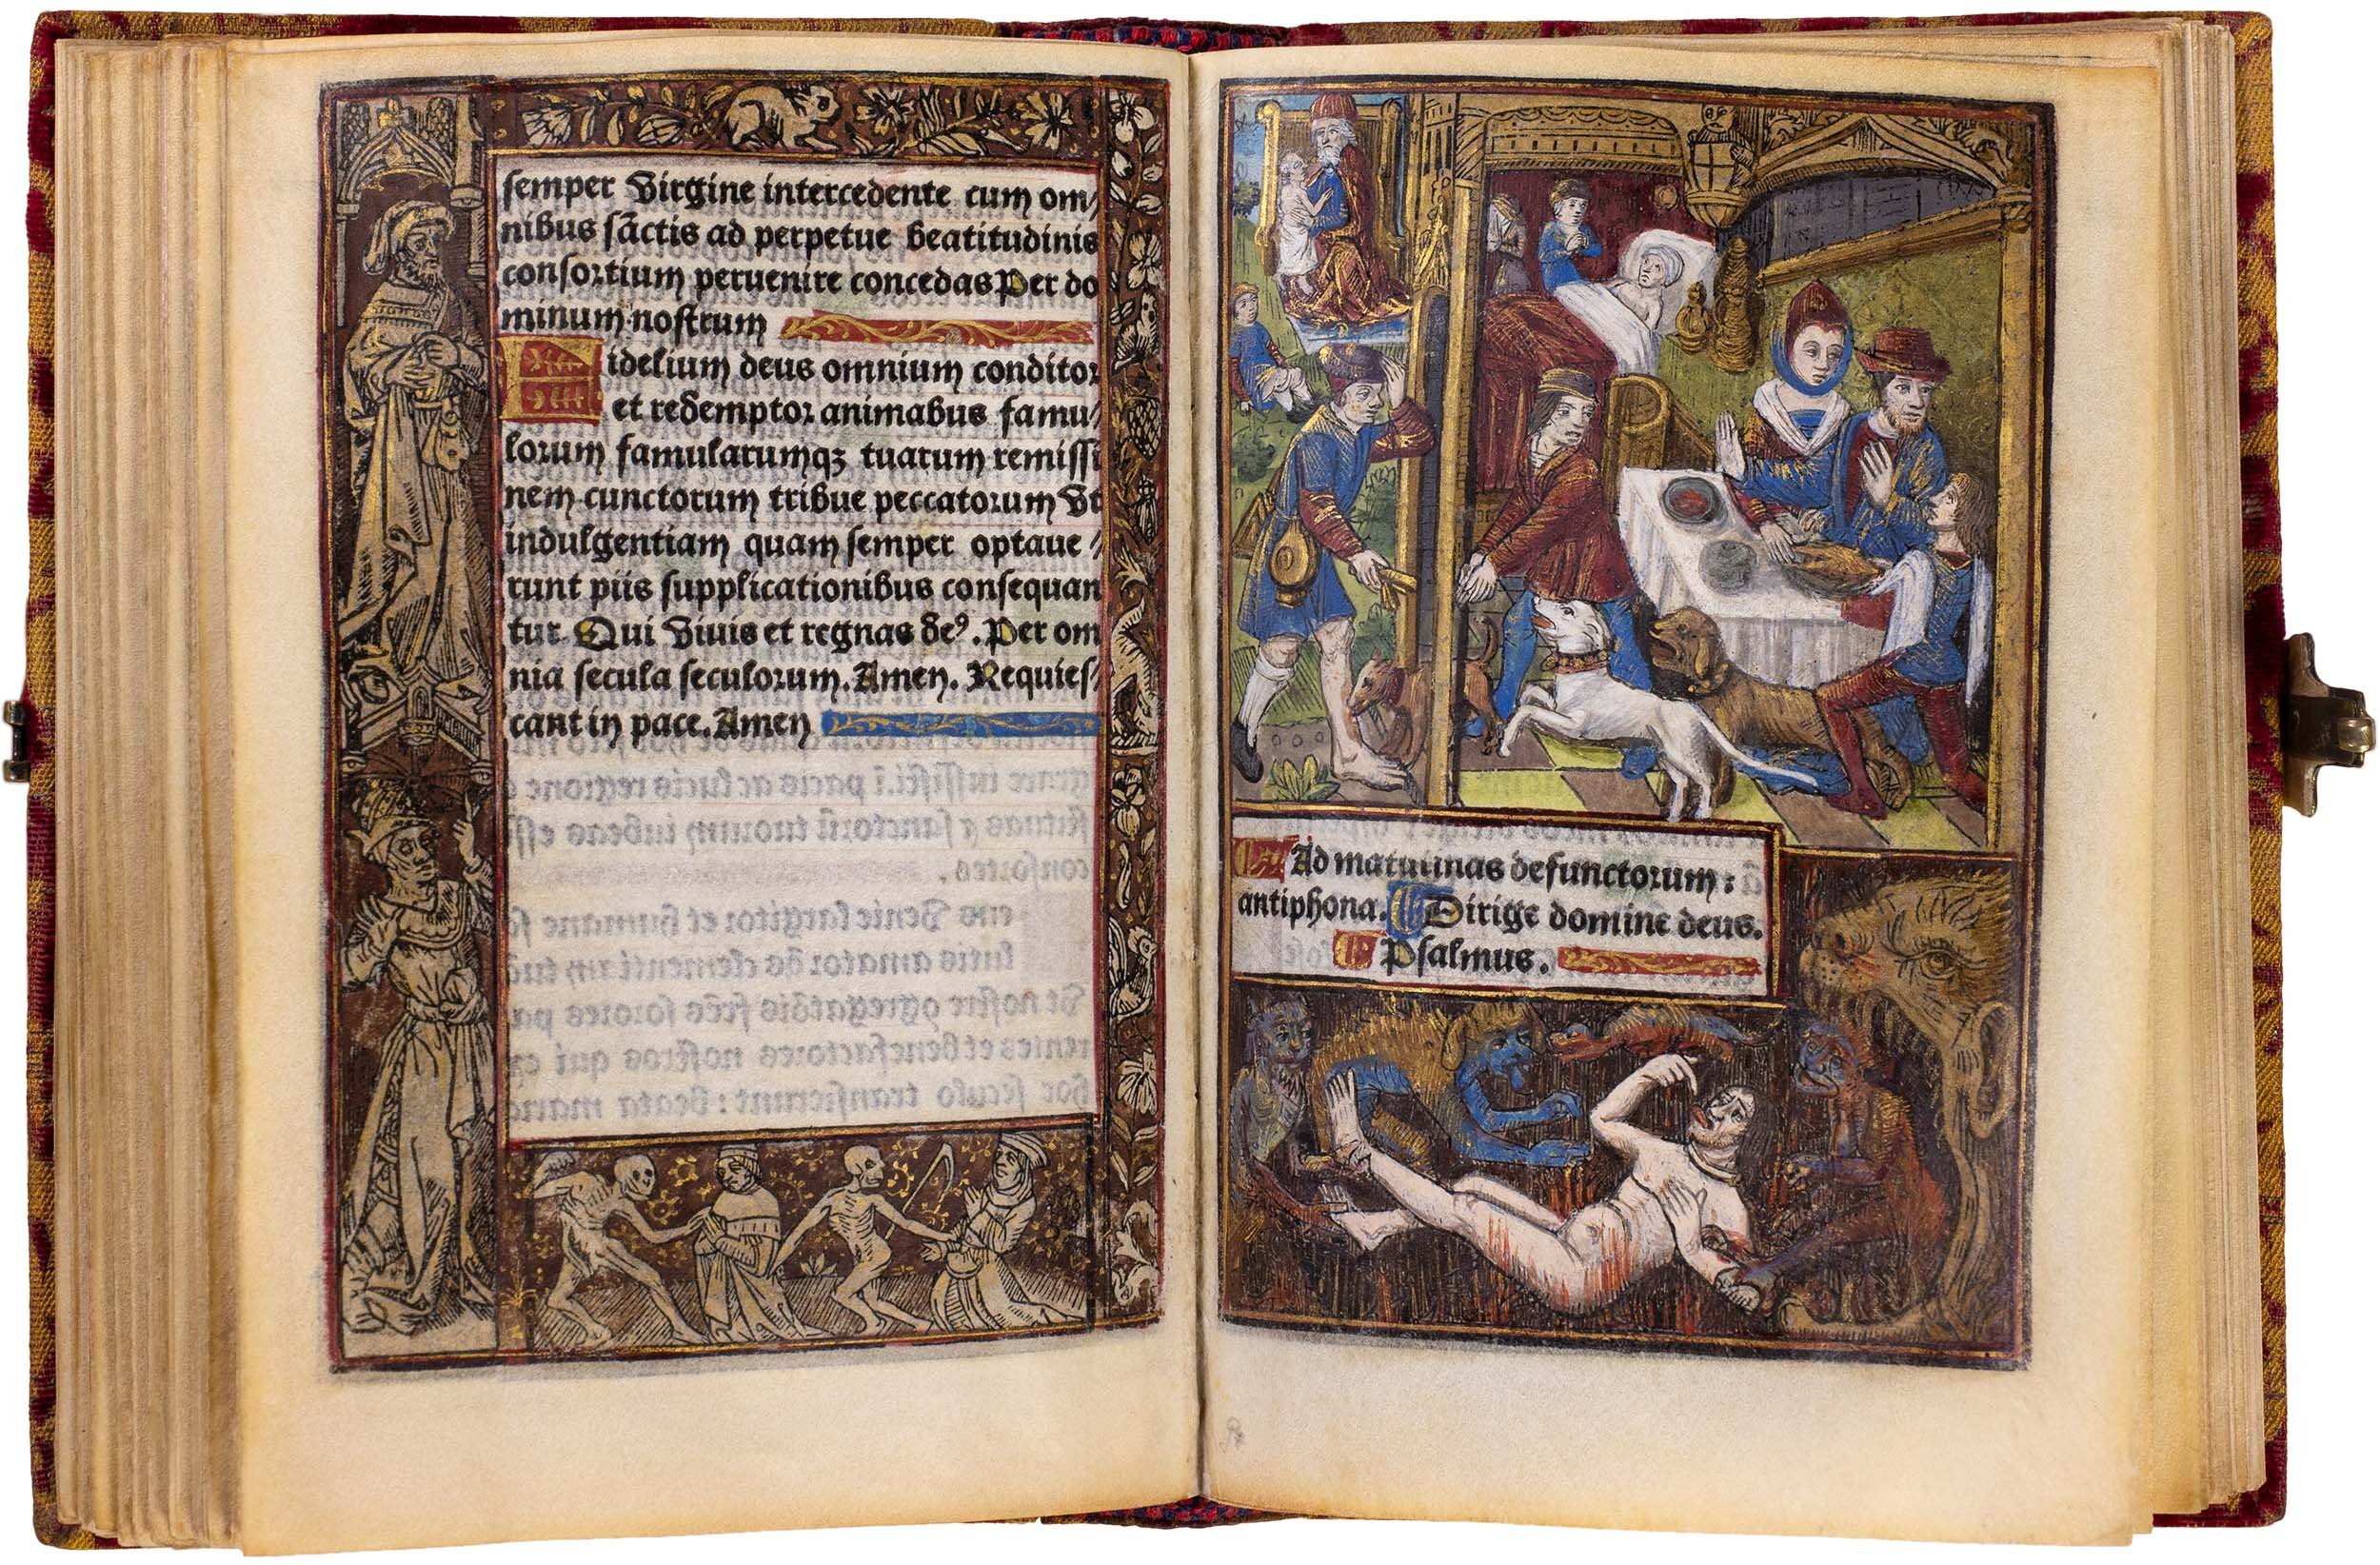 Horae-bmv-1488-gamma-dupre-printed-book-of-hours-danse-macabre-camaieu-dor-illuminated-vellum-copy-78.jpg